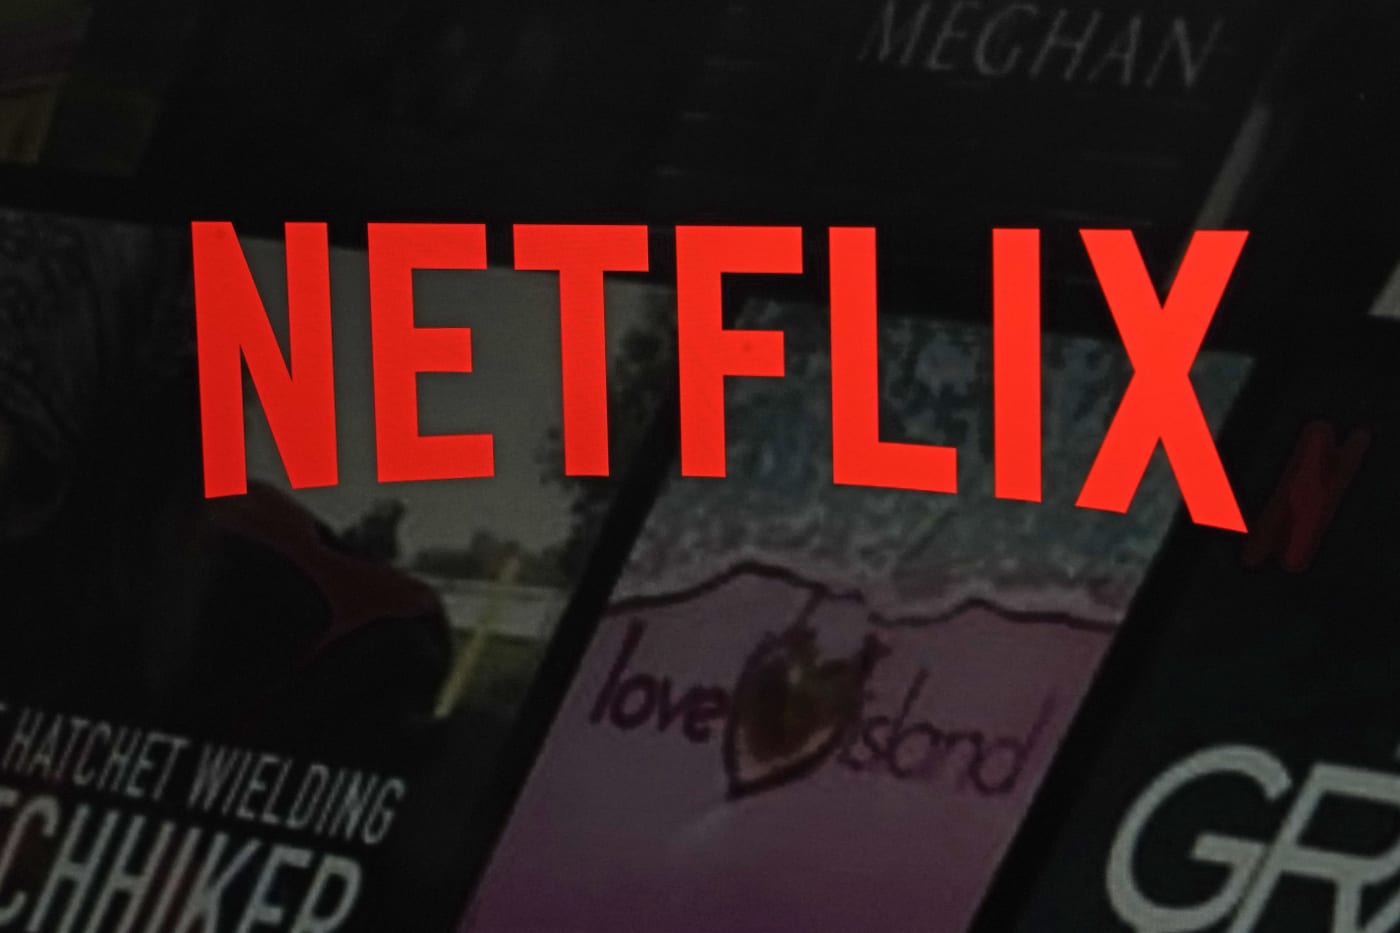 Netflix is done telling us how many people use Netflix